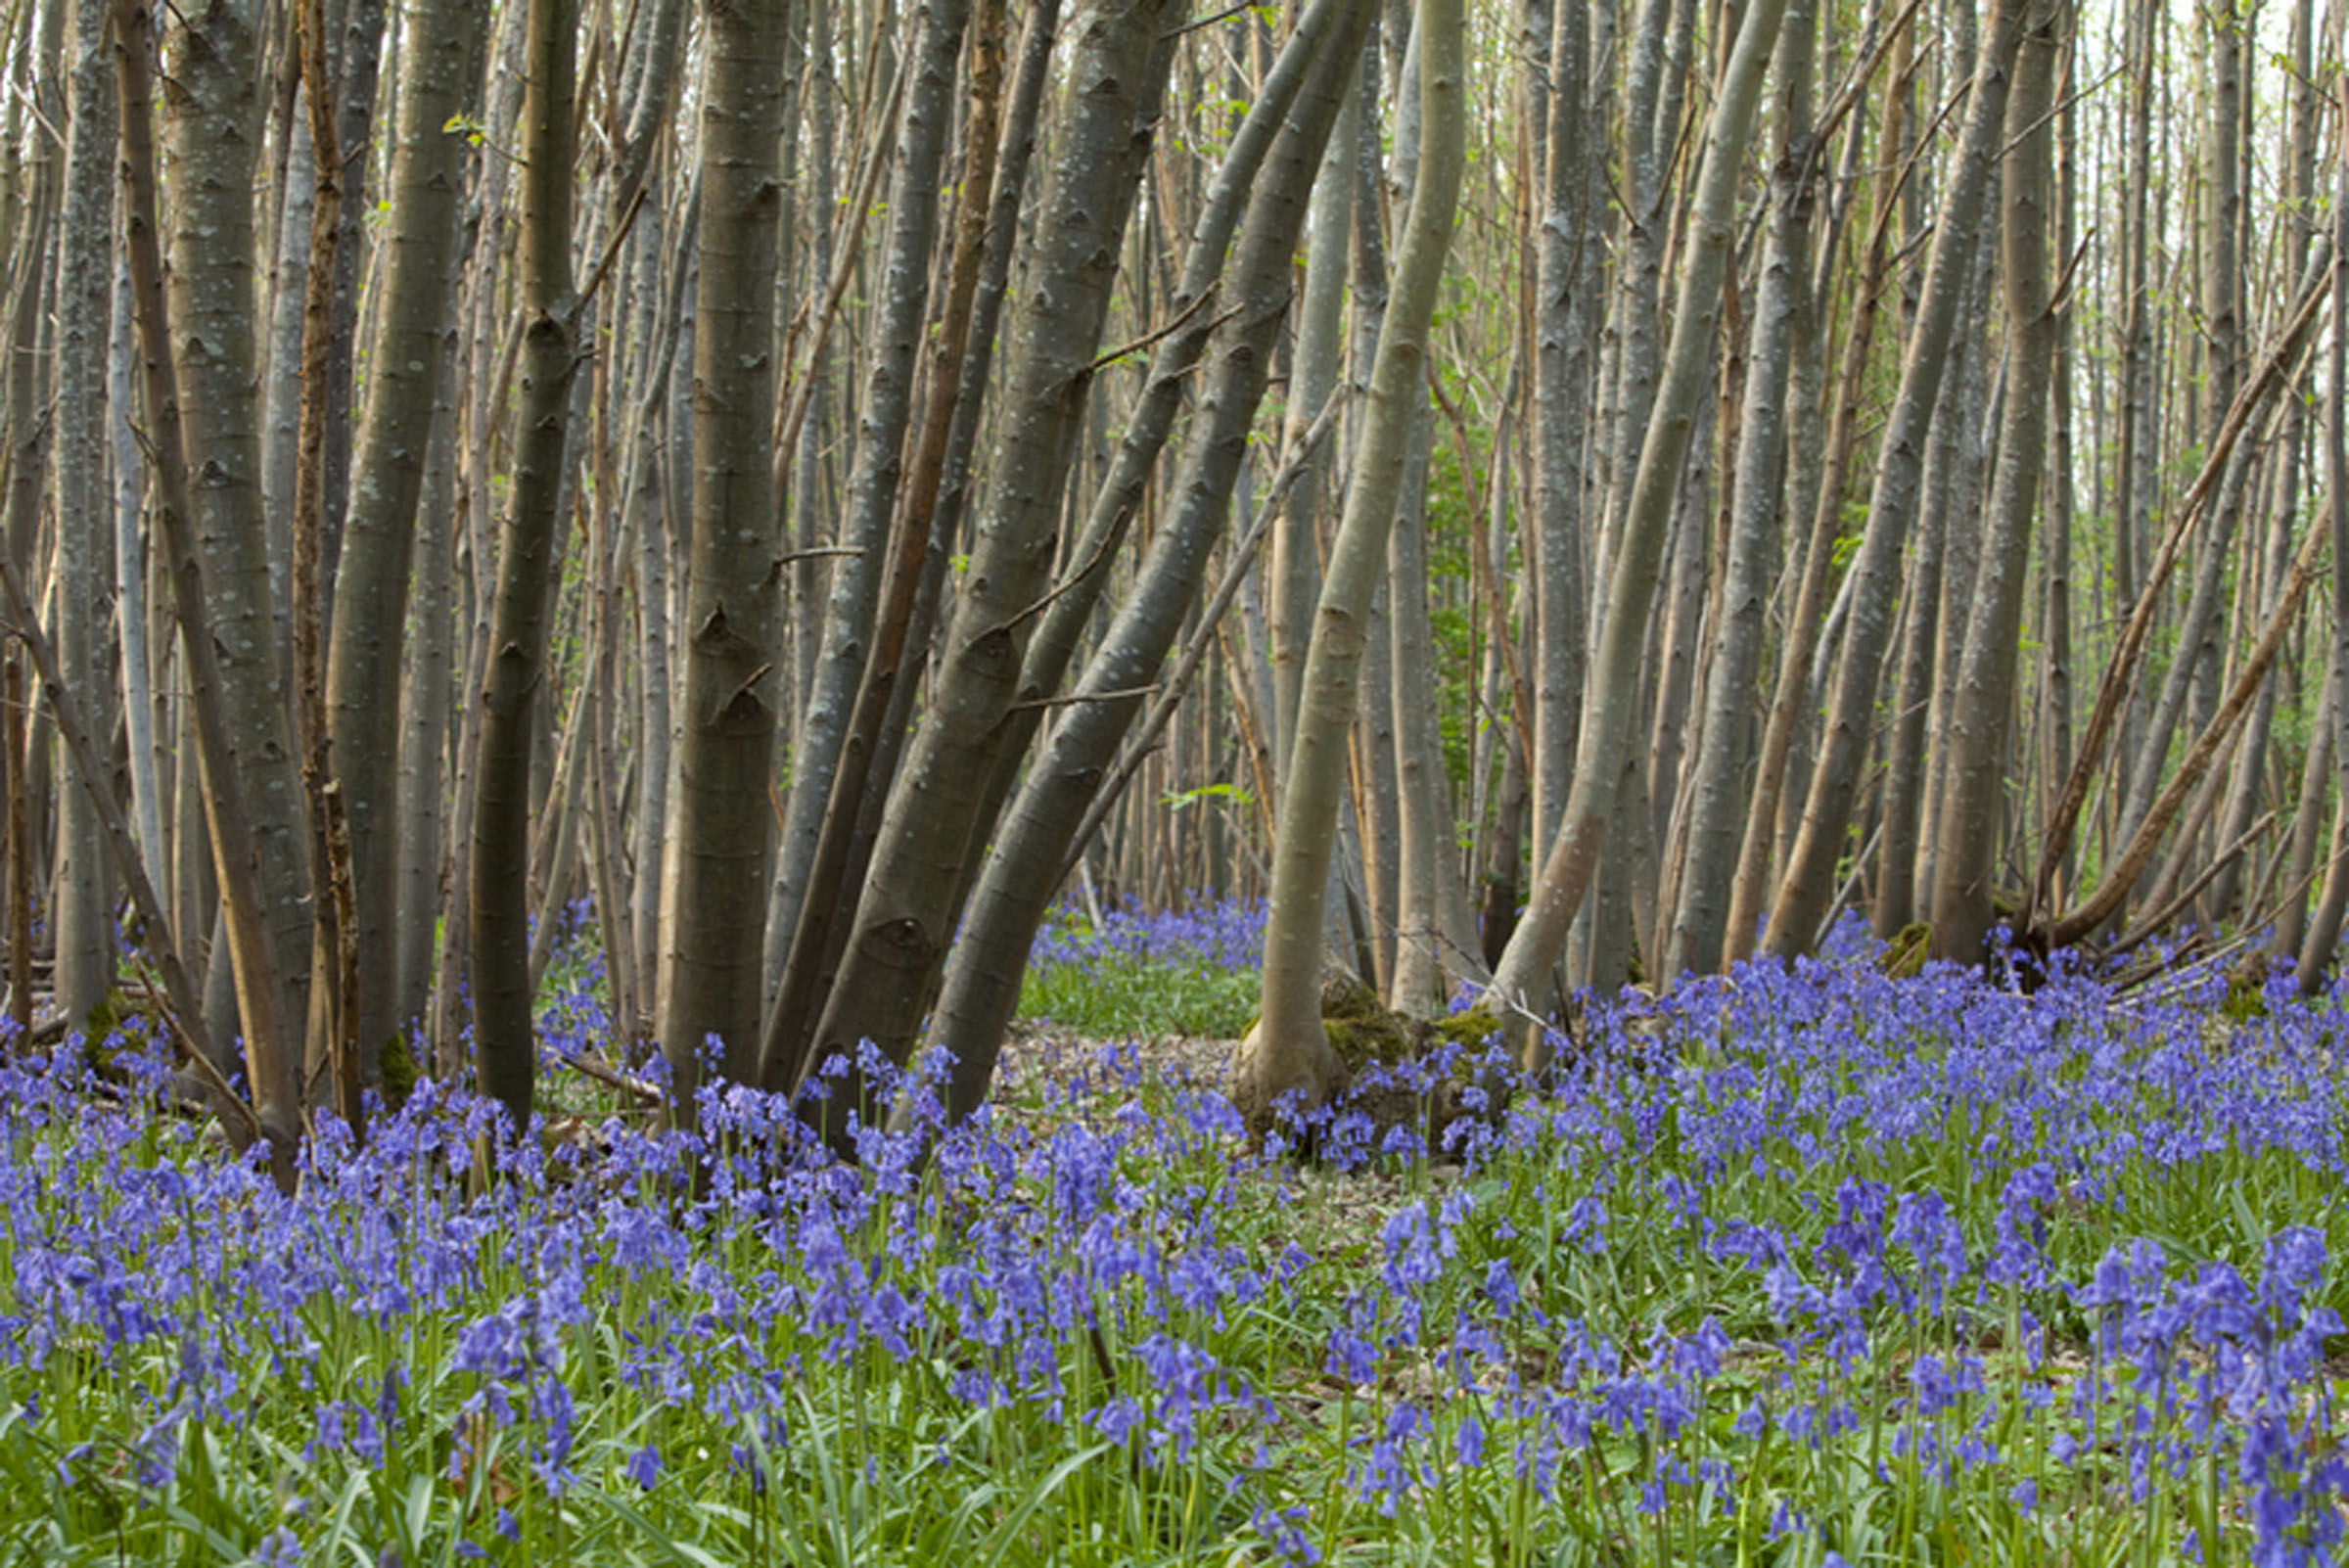 Bluebells undeneath trees in wood